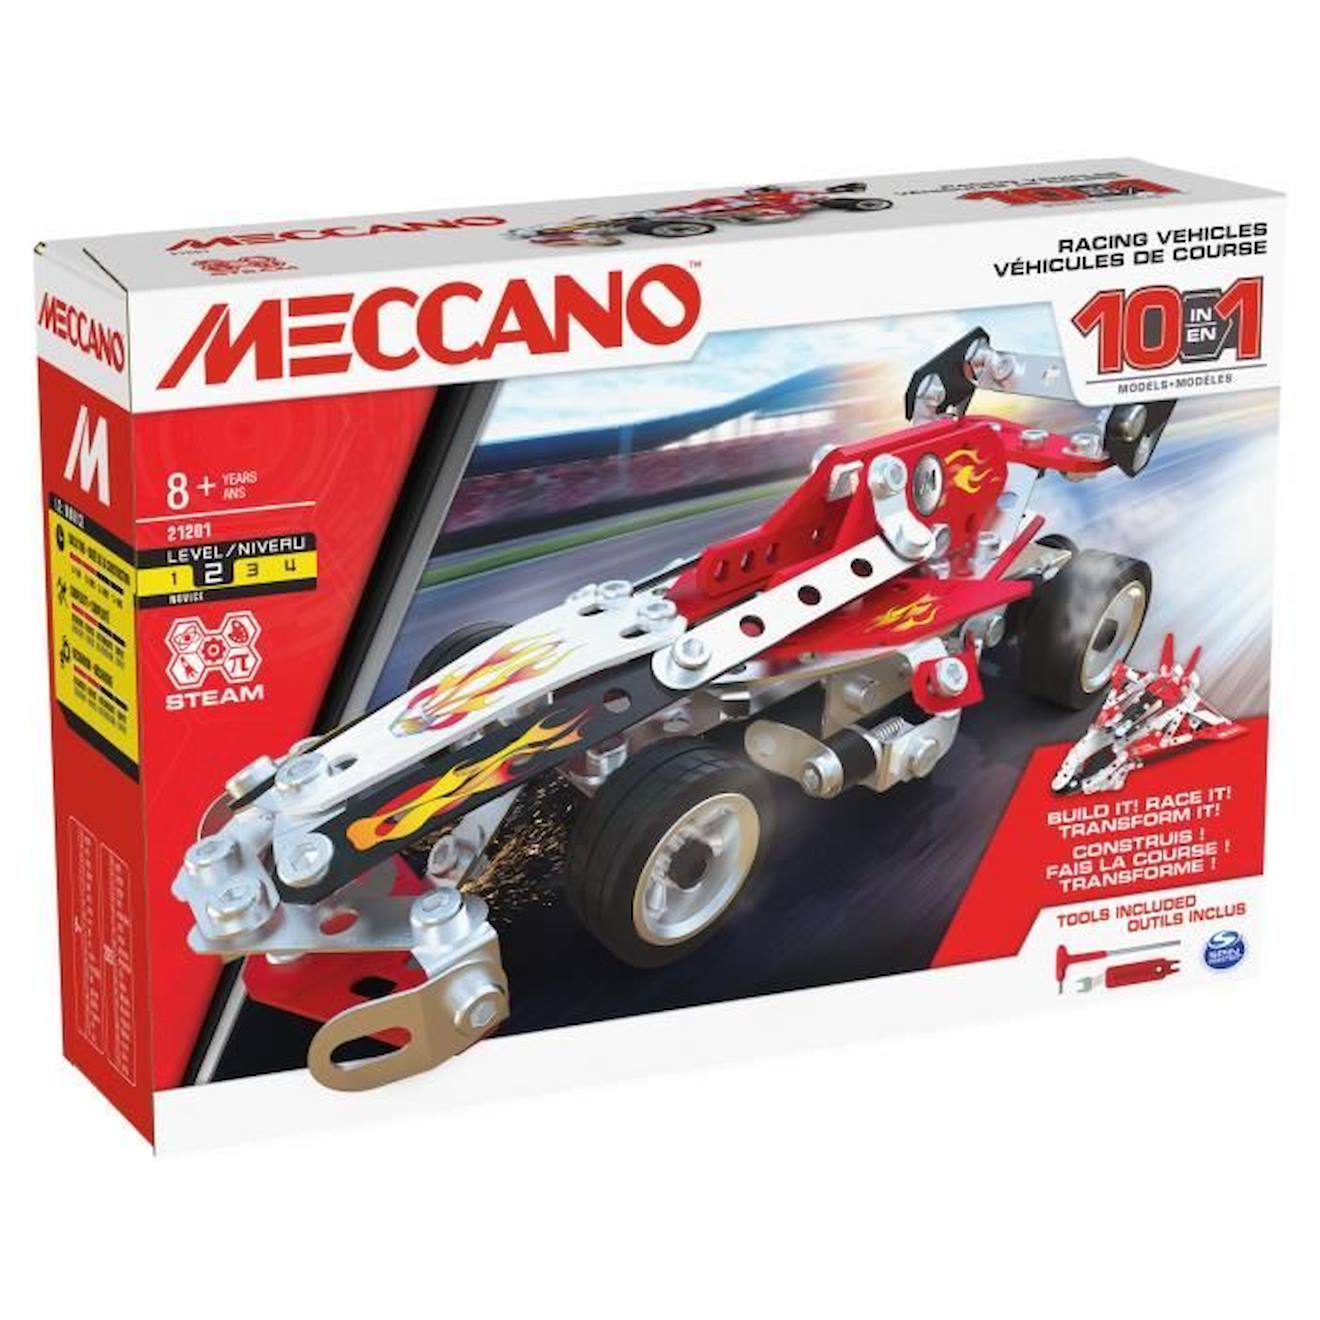 Meccano - Vehicules De Course 10 Modeles - 6060104 - 10 Modèles De Véhicules De Course A Construire 